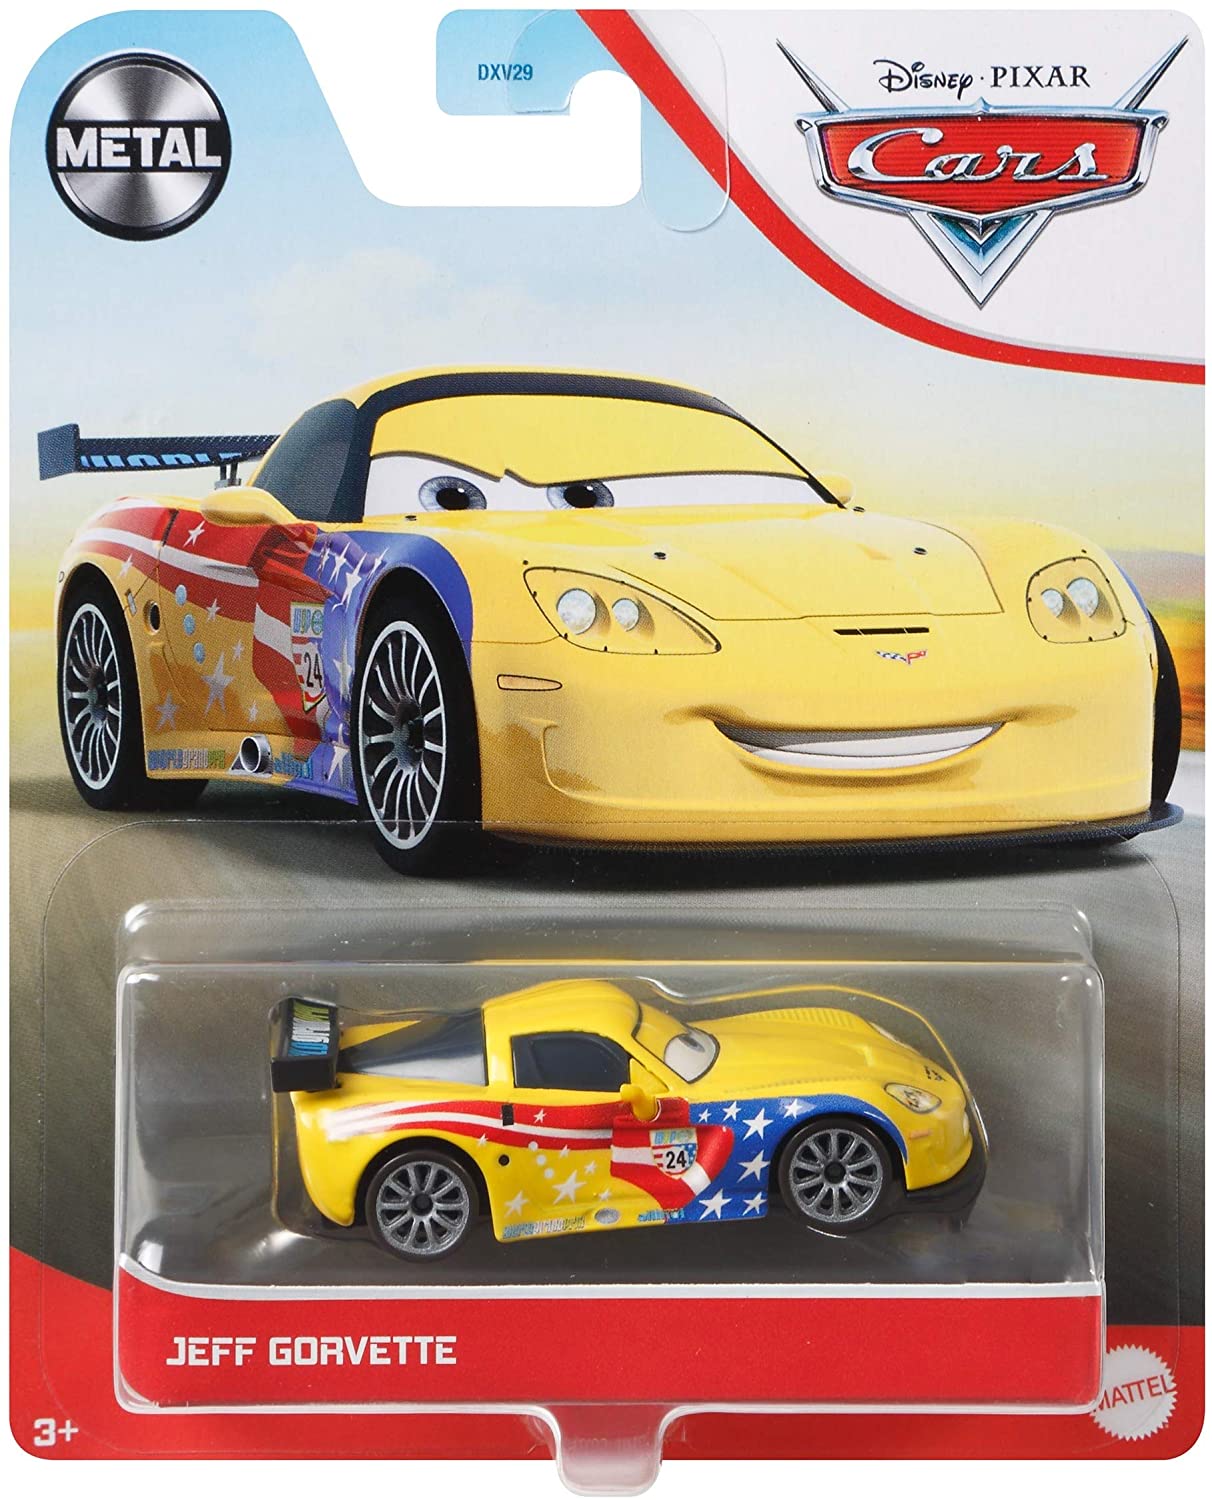 Color Vehicles For Kids, Goo Goo Baby Play Cartoon Racing Car